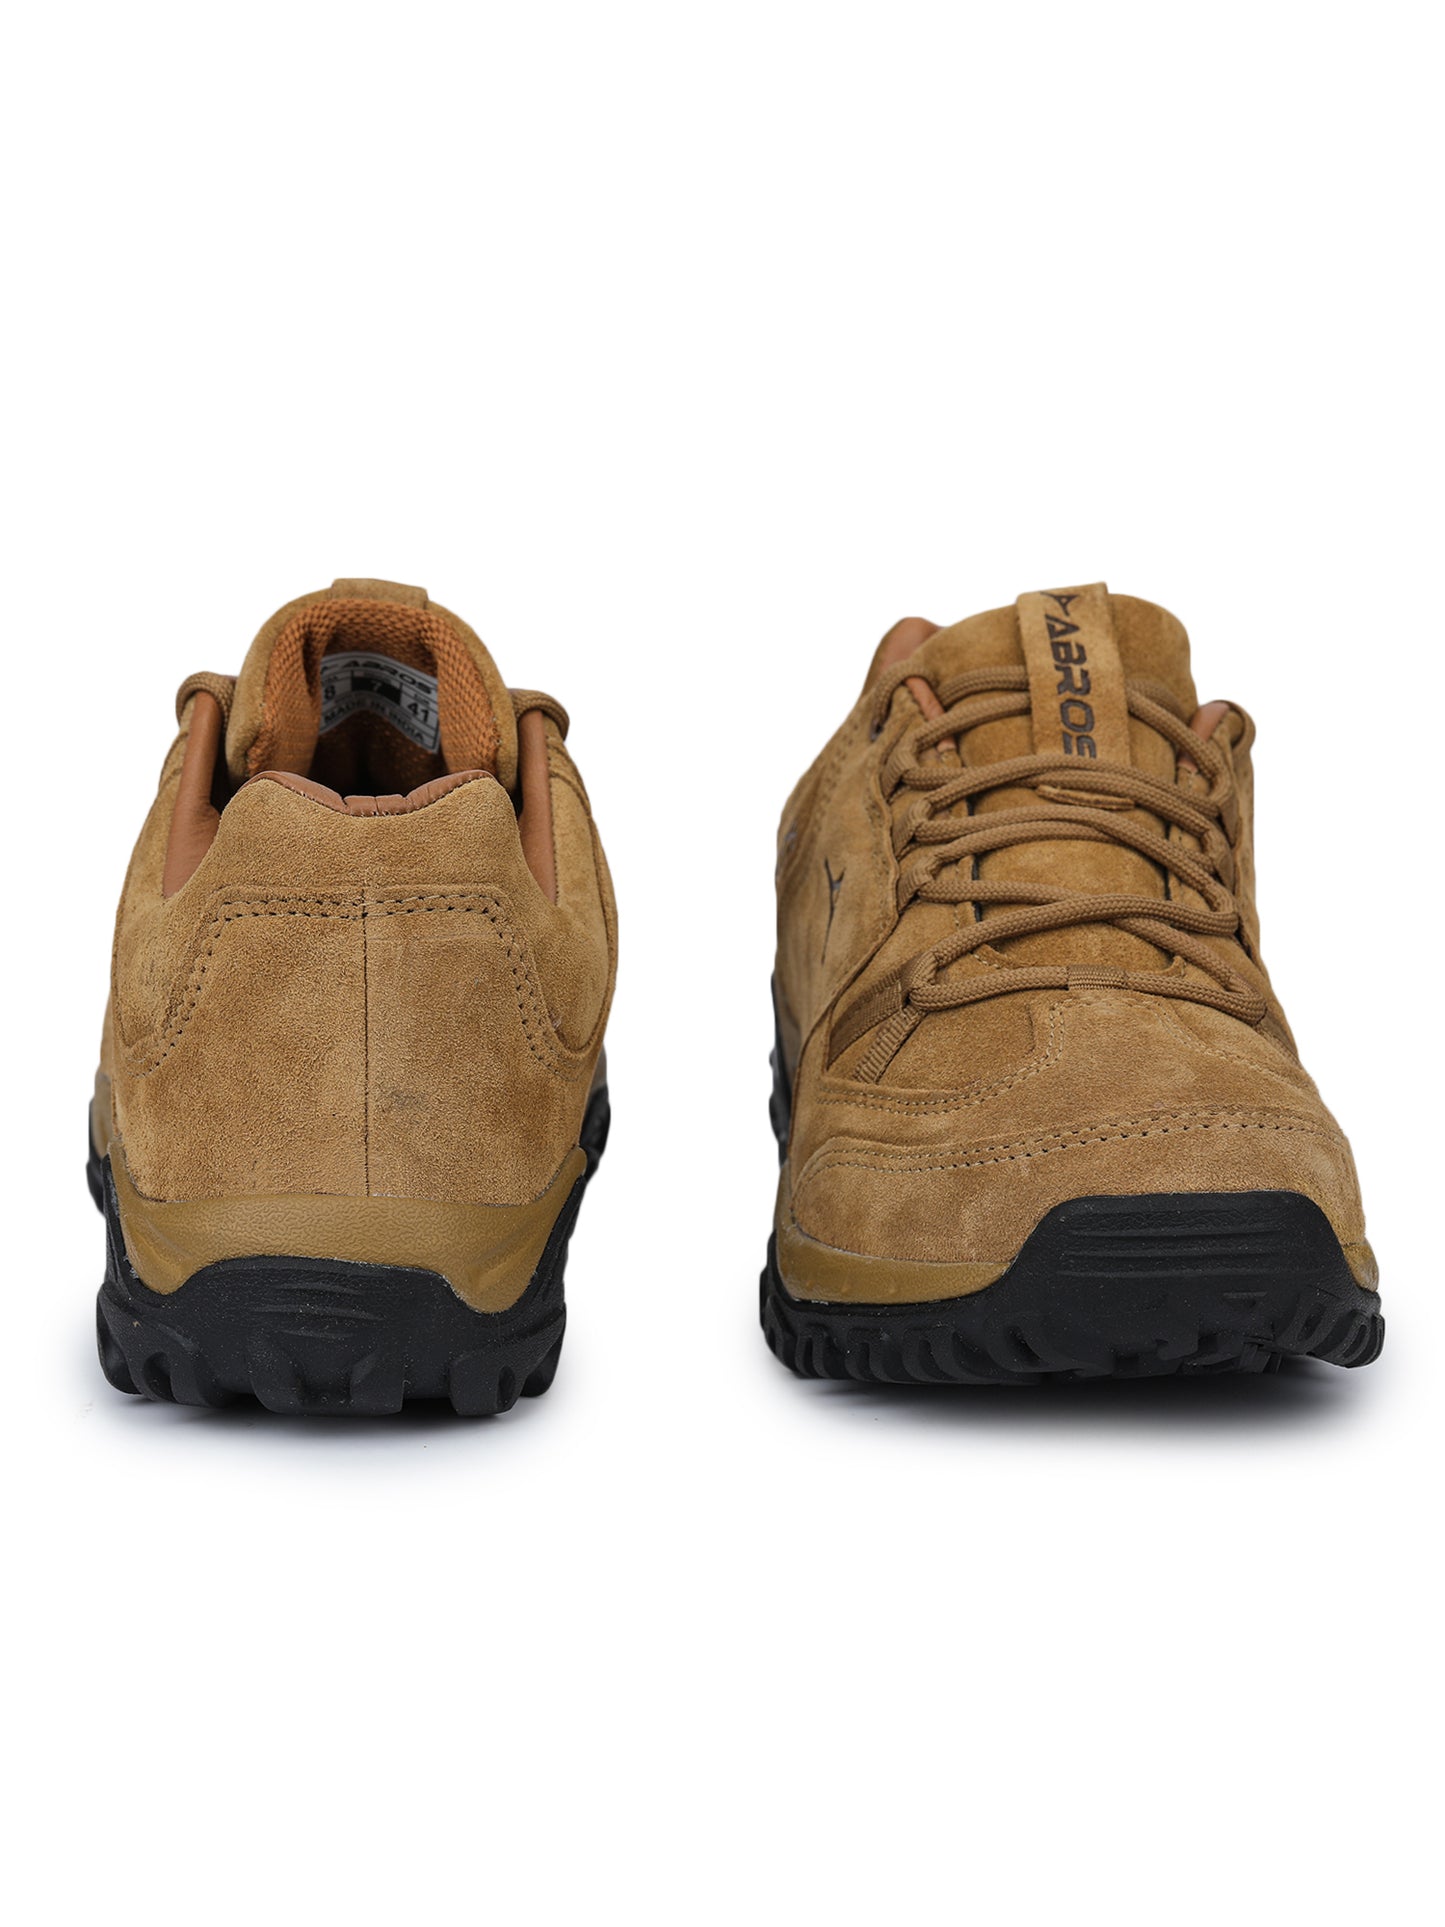 Blairo Outdoor-Shoes For Men's